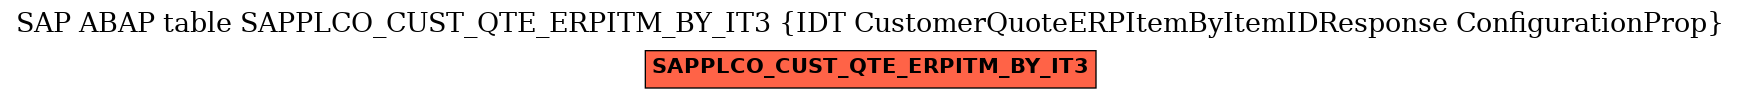 E-R Diagram for table SAPPLCO_CUST_QTE_ERPITM_BY_IT3 (IDT CustomerQuoteERPItemByItemIDResponse ConfigurationProp)